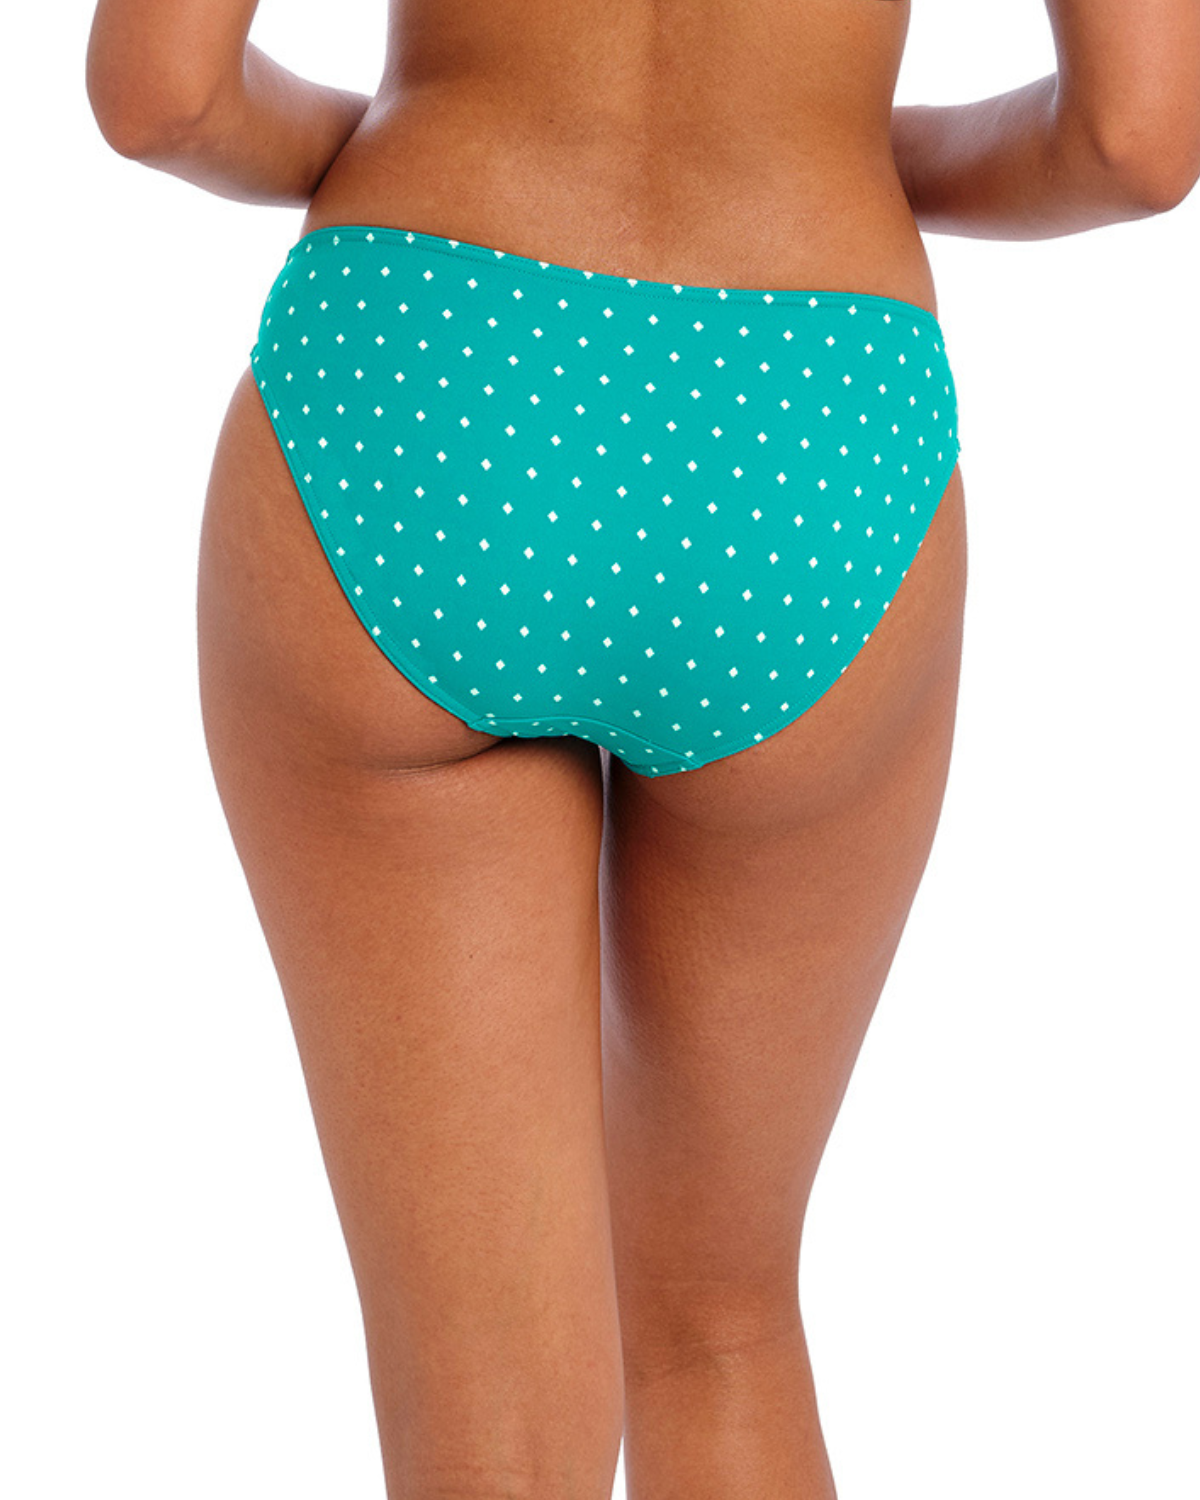 Model wearing a bikini brief bottom in a white dot and turquoise base print